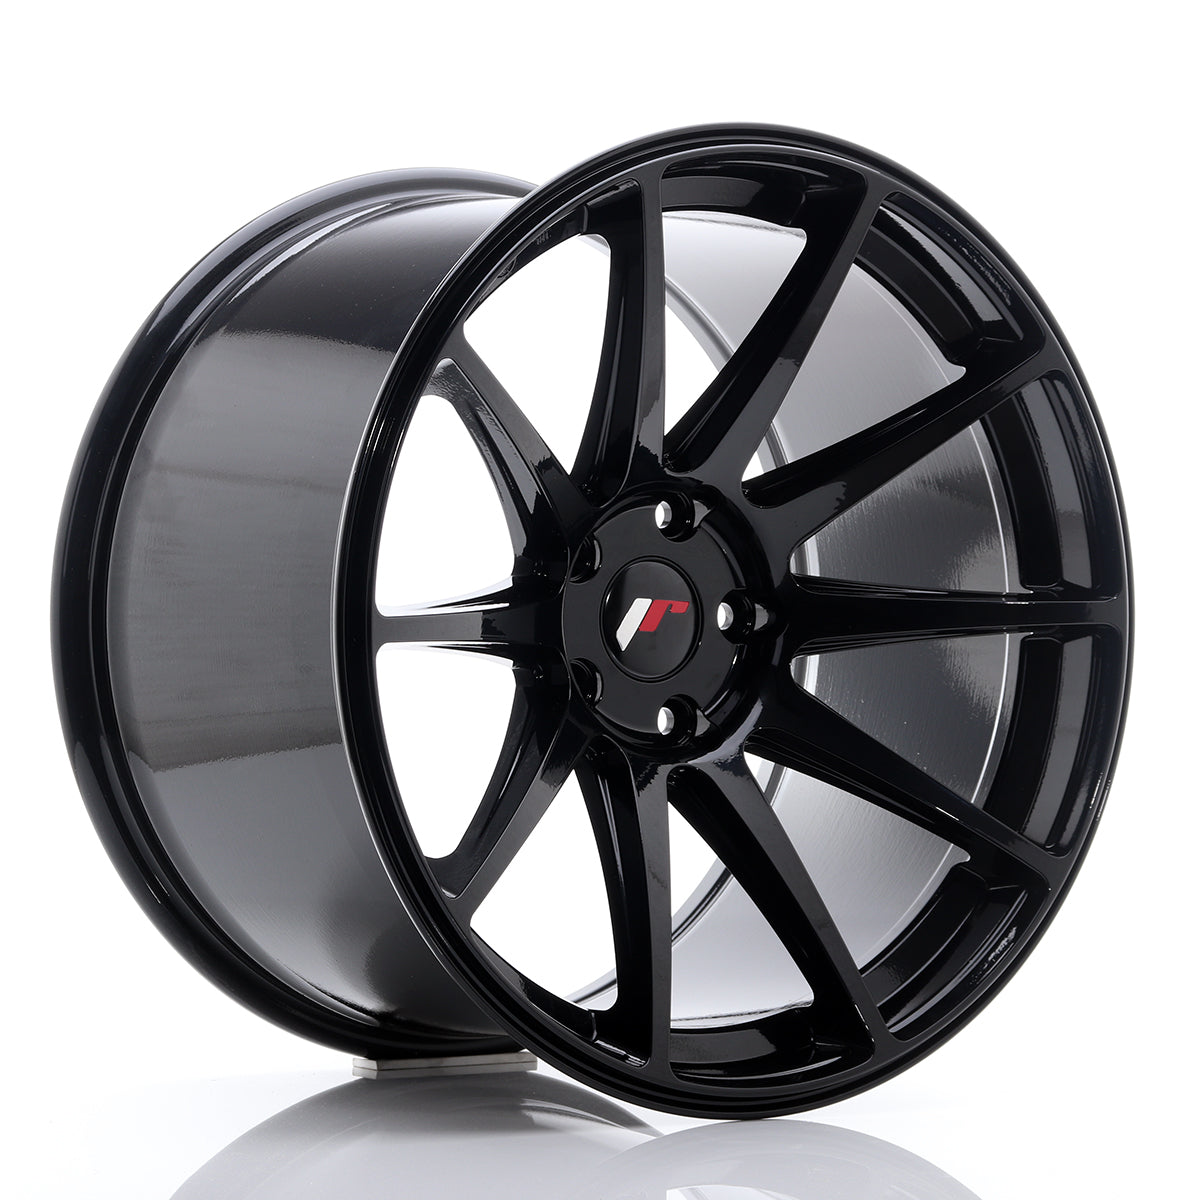 JR Wheels JR11 19x11 ET25 5x120 Glossy Black